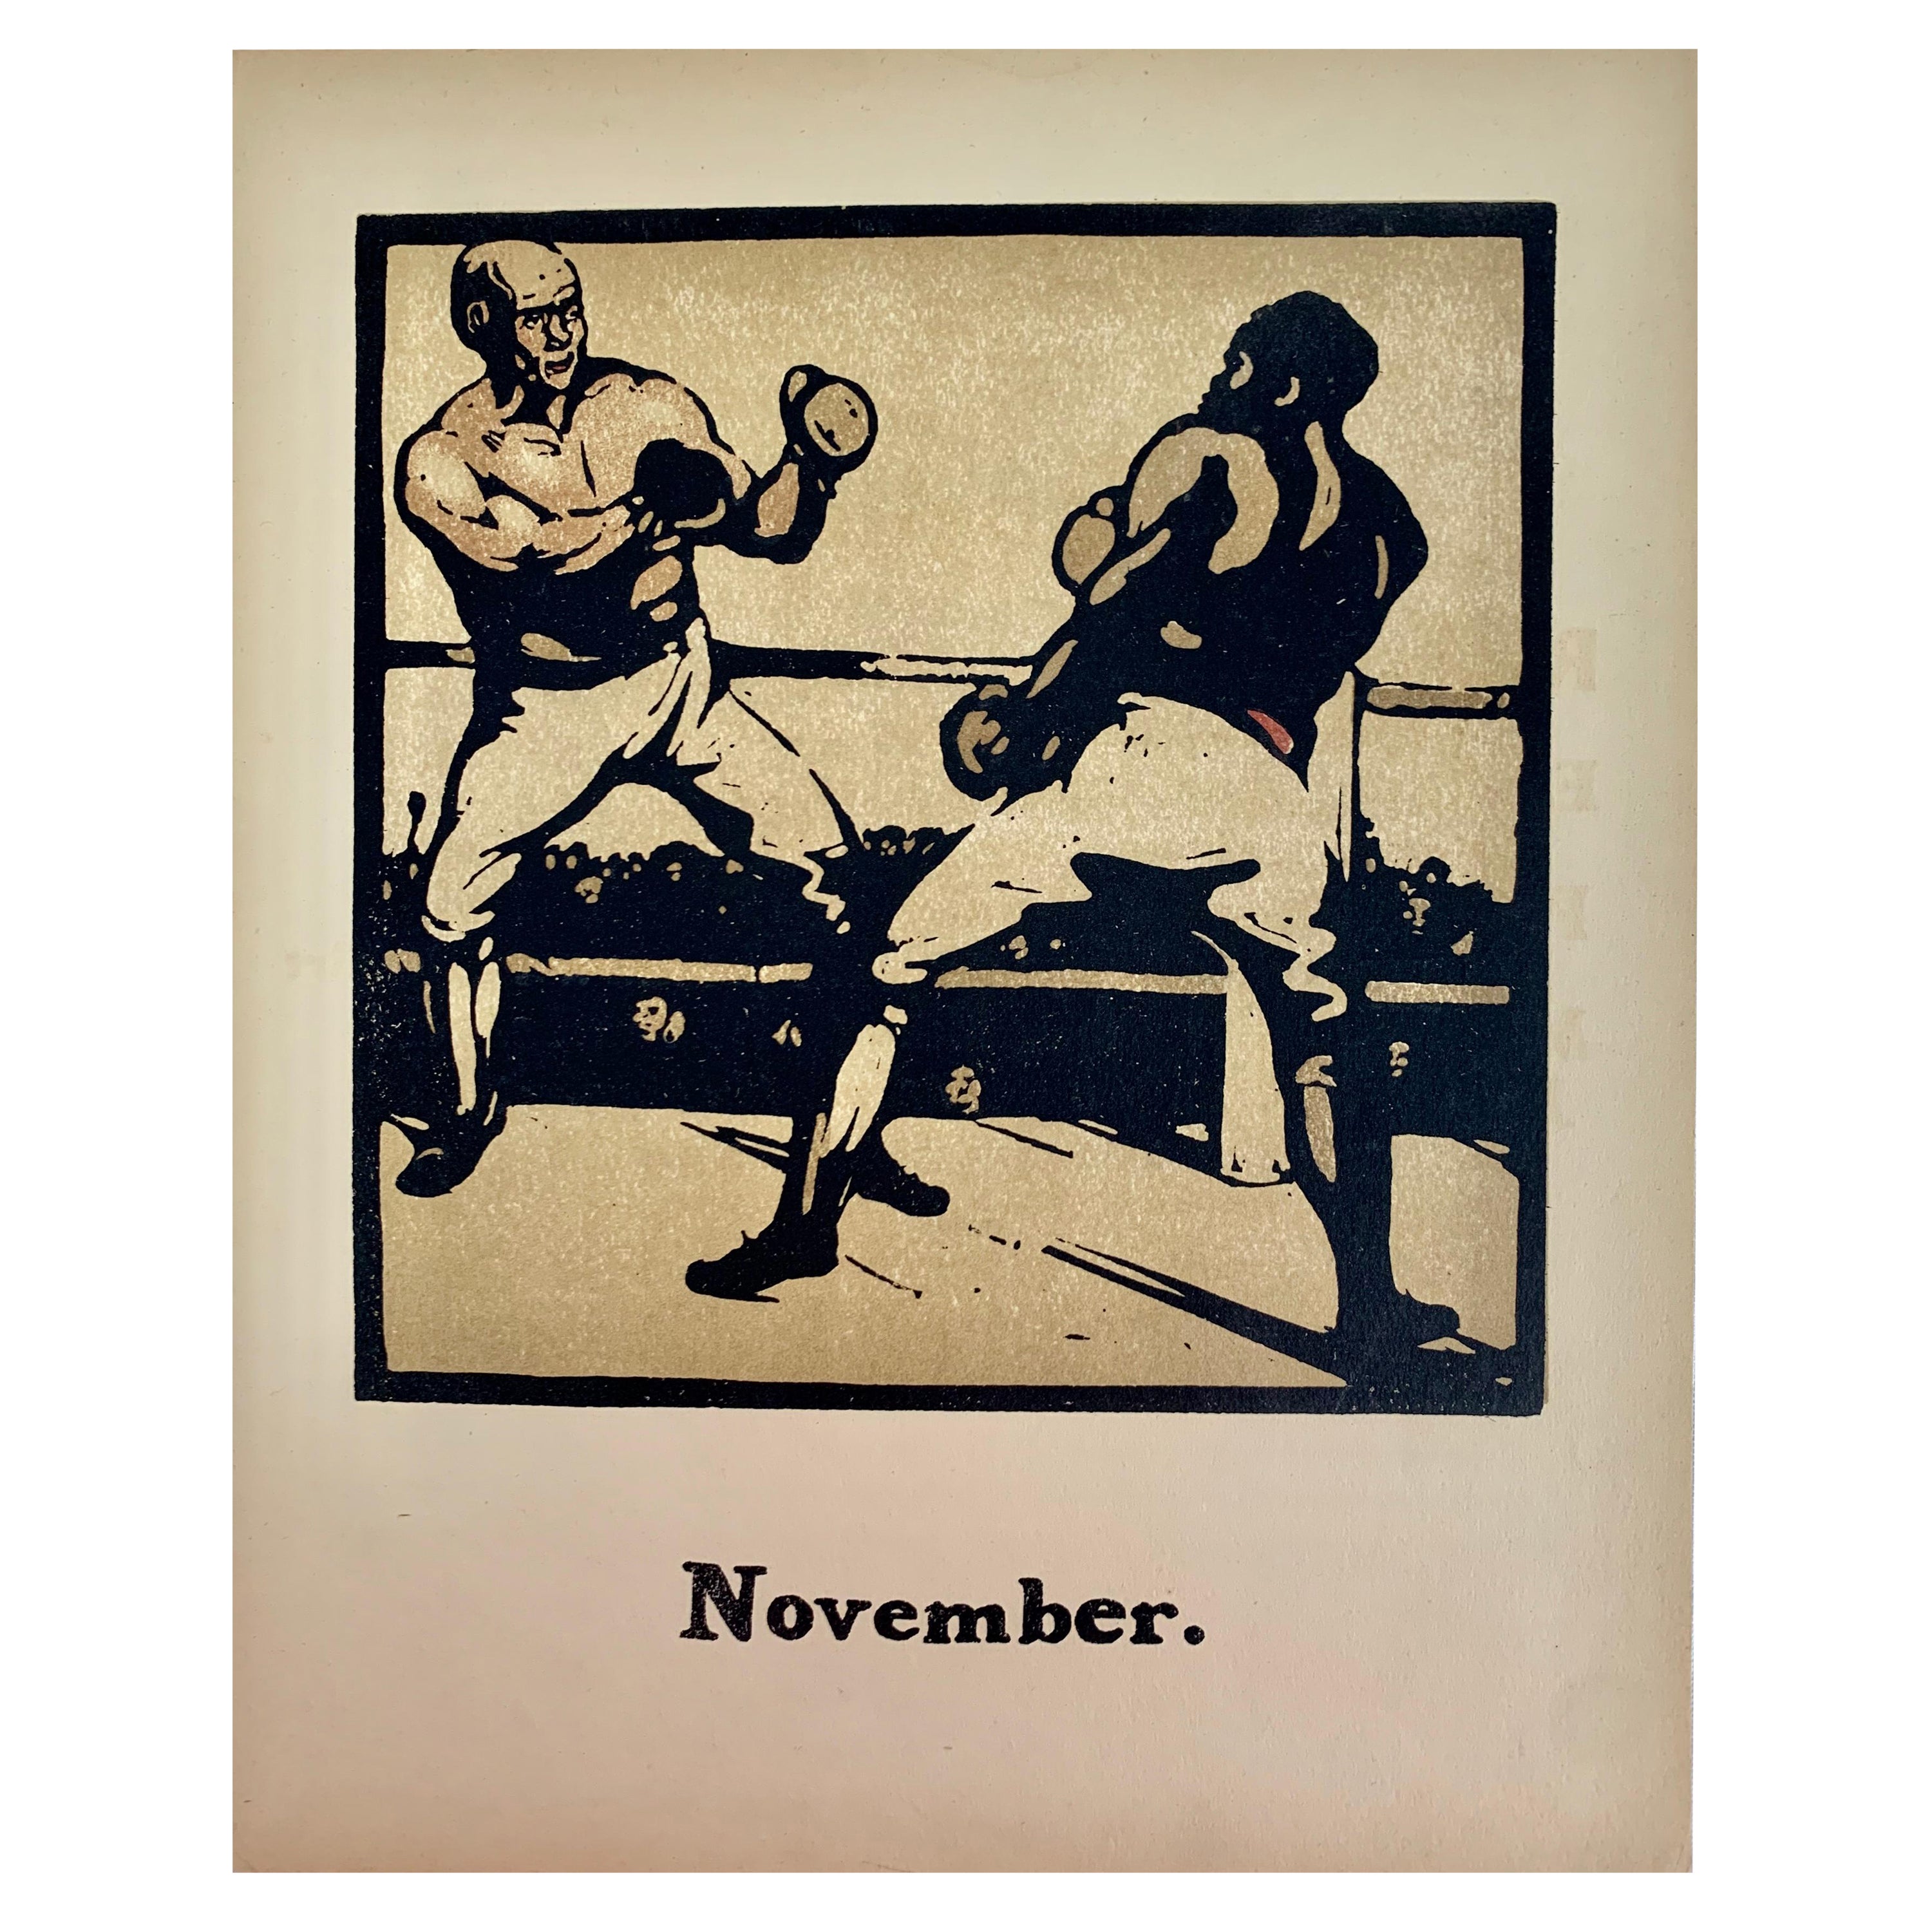 Wm. Nicholson's "Boxing" from Almanac of Twelve Sports, First Impression, 1897